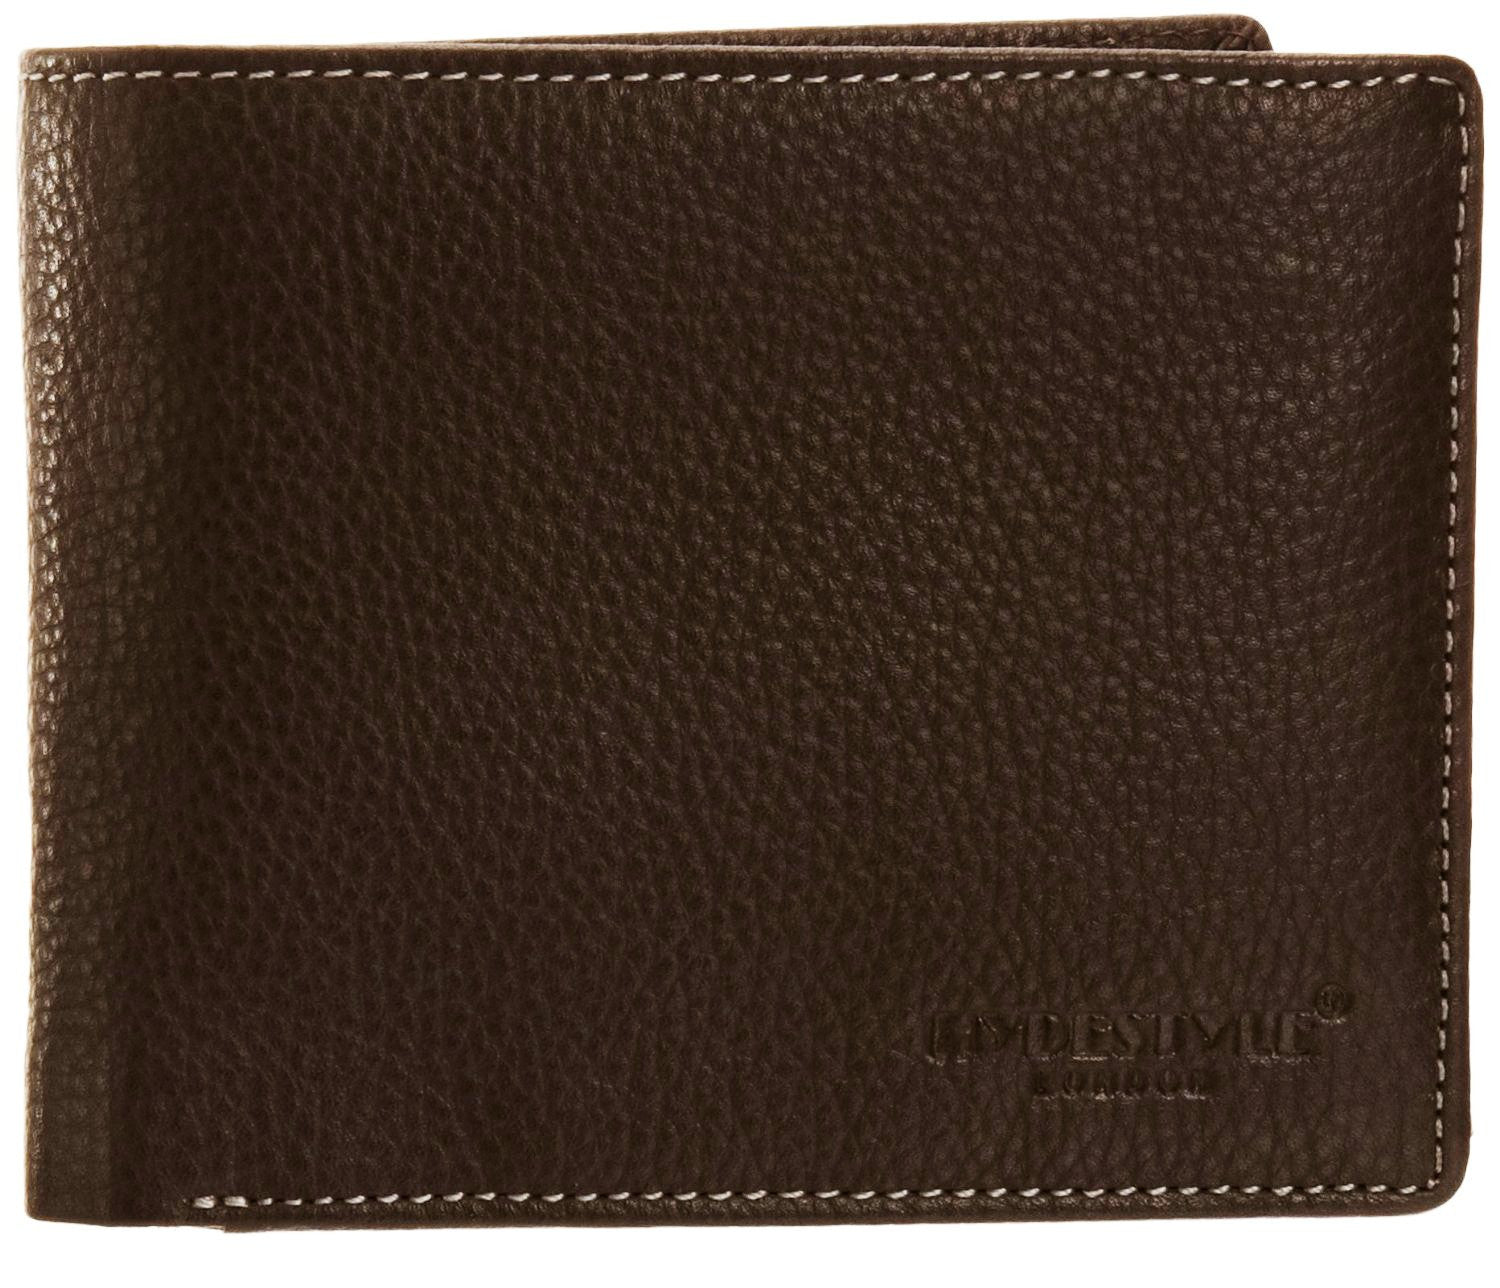 Pratico - mens 17 card leather trifold wallet #GW50 Brown